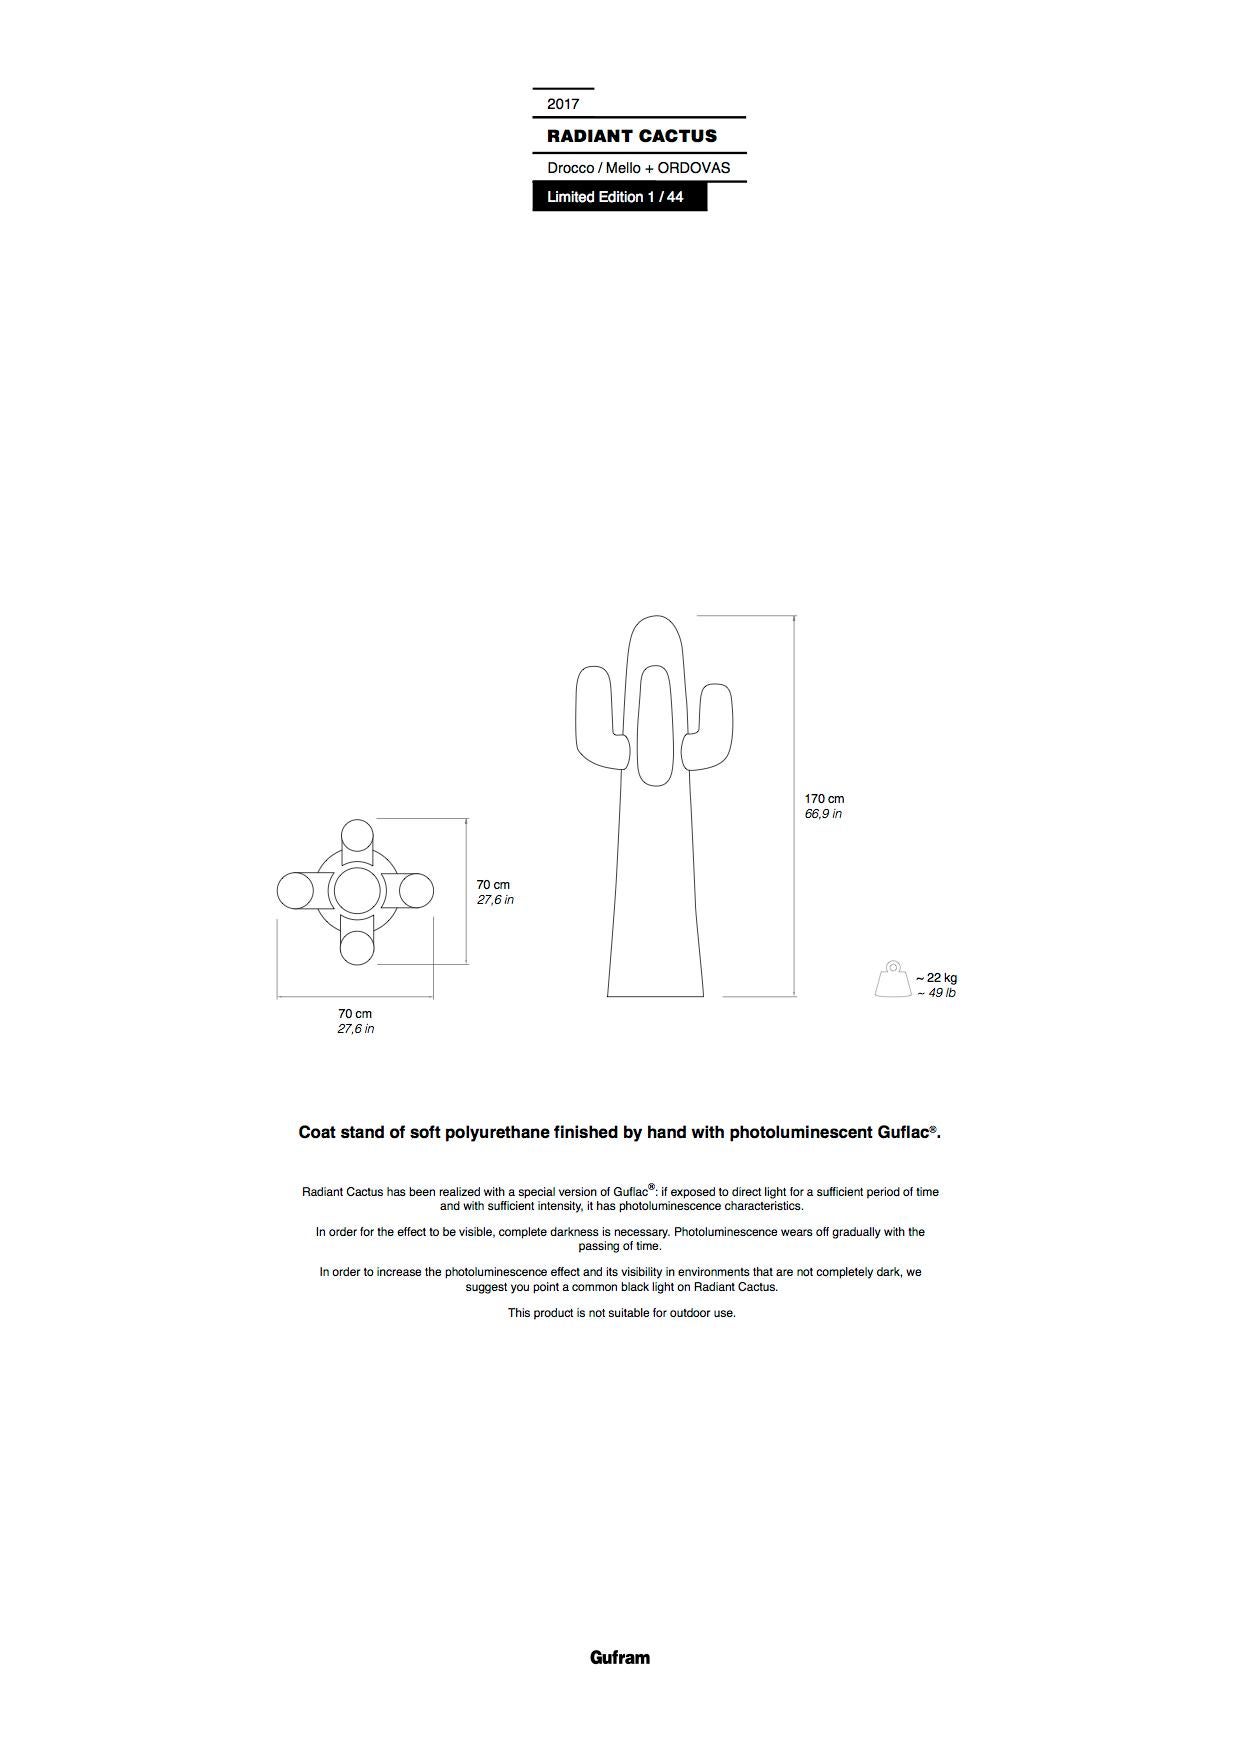 Foam Gufram Radiant Cactus Sculptural Coatrack by Drocco & Mello and Ordovas For Sale